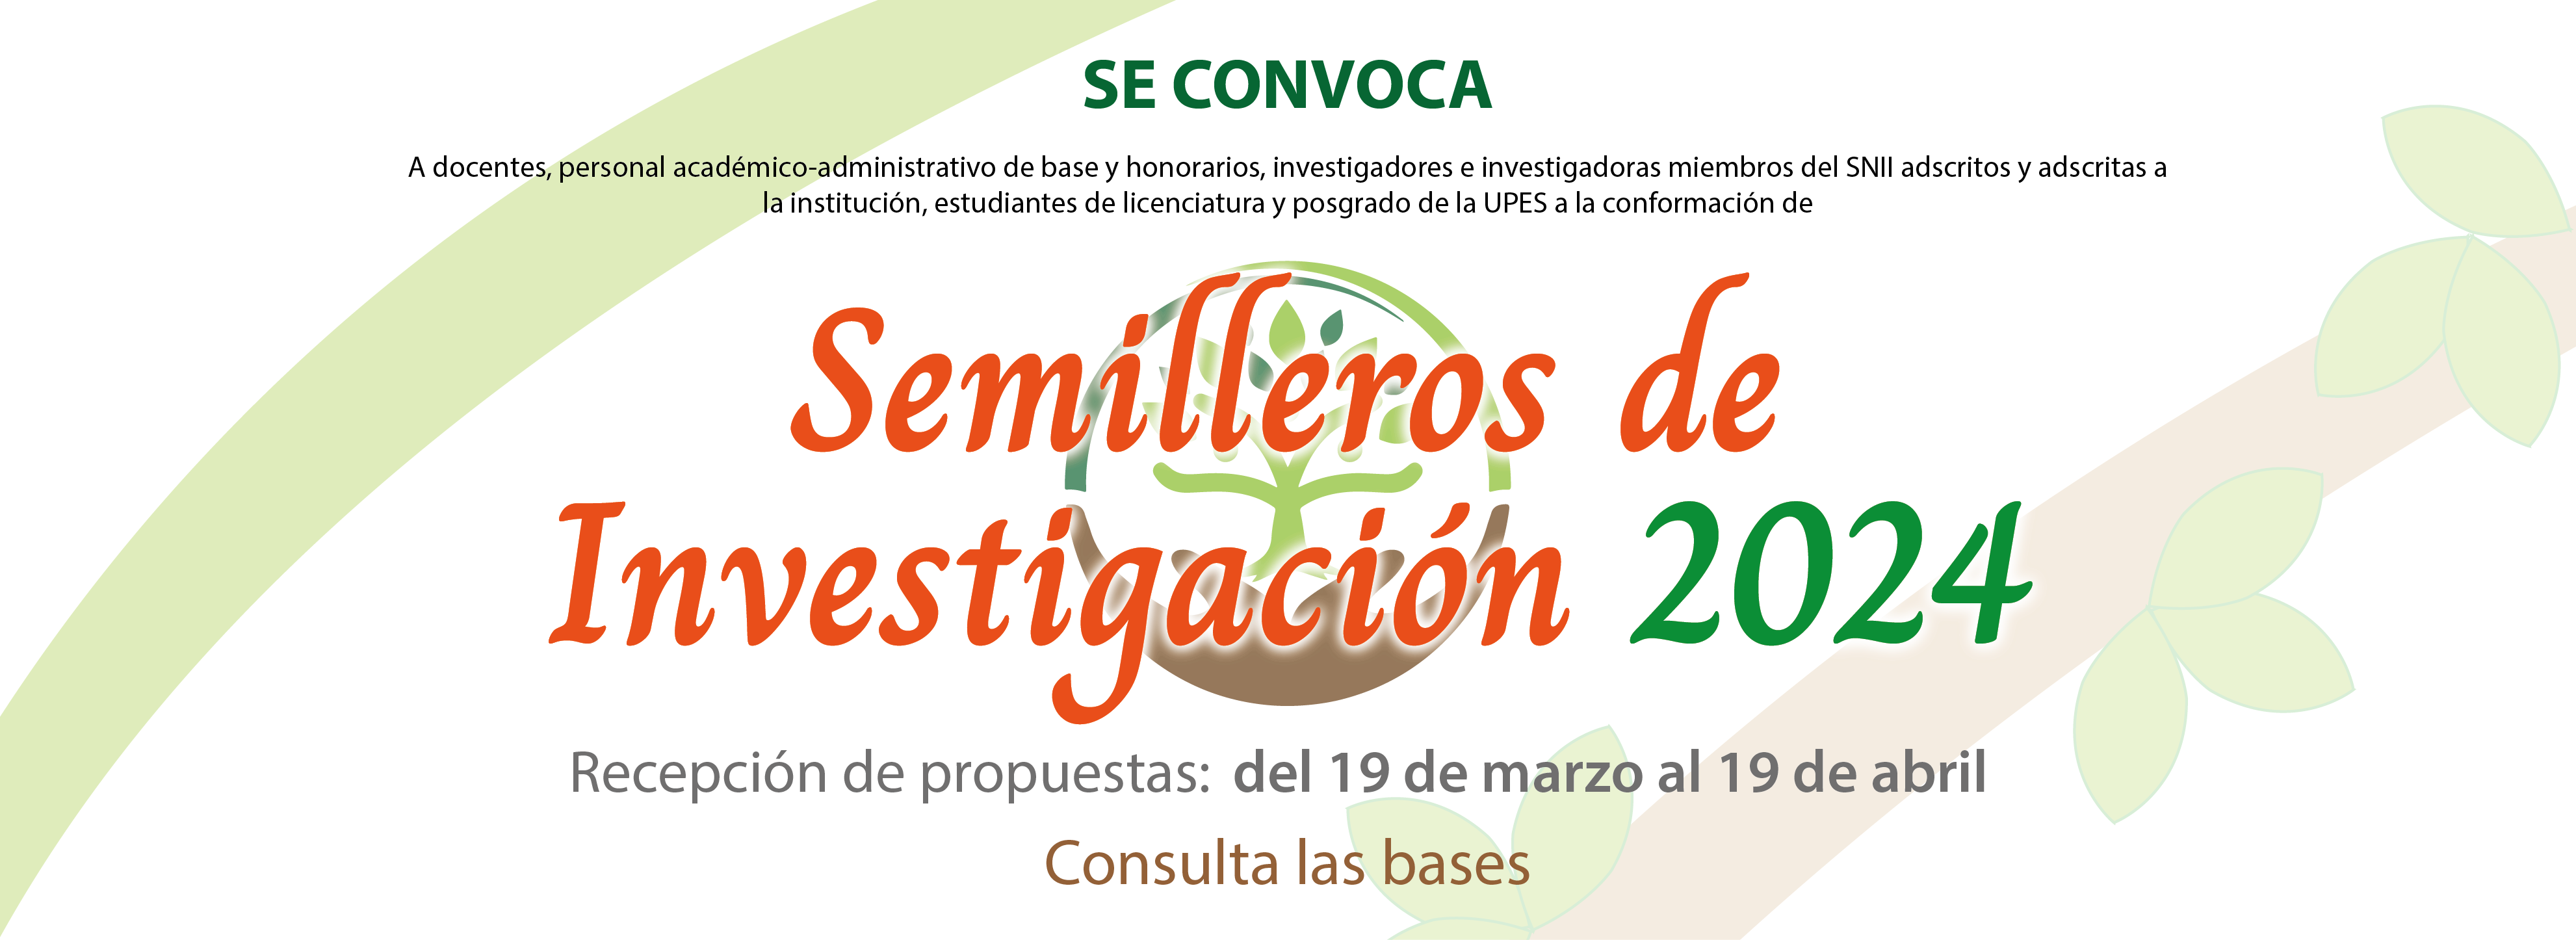 Semilleros_de_investigacion_2024_banner_web